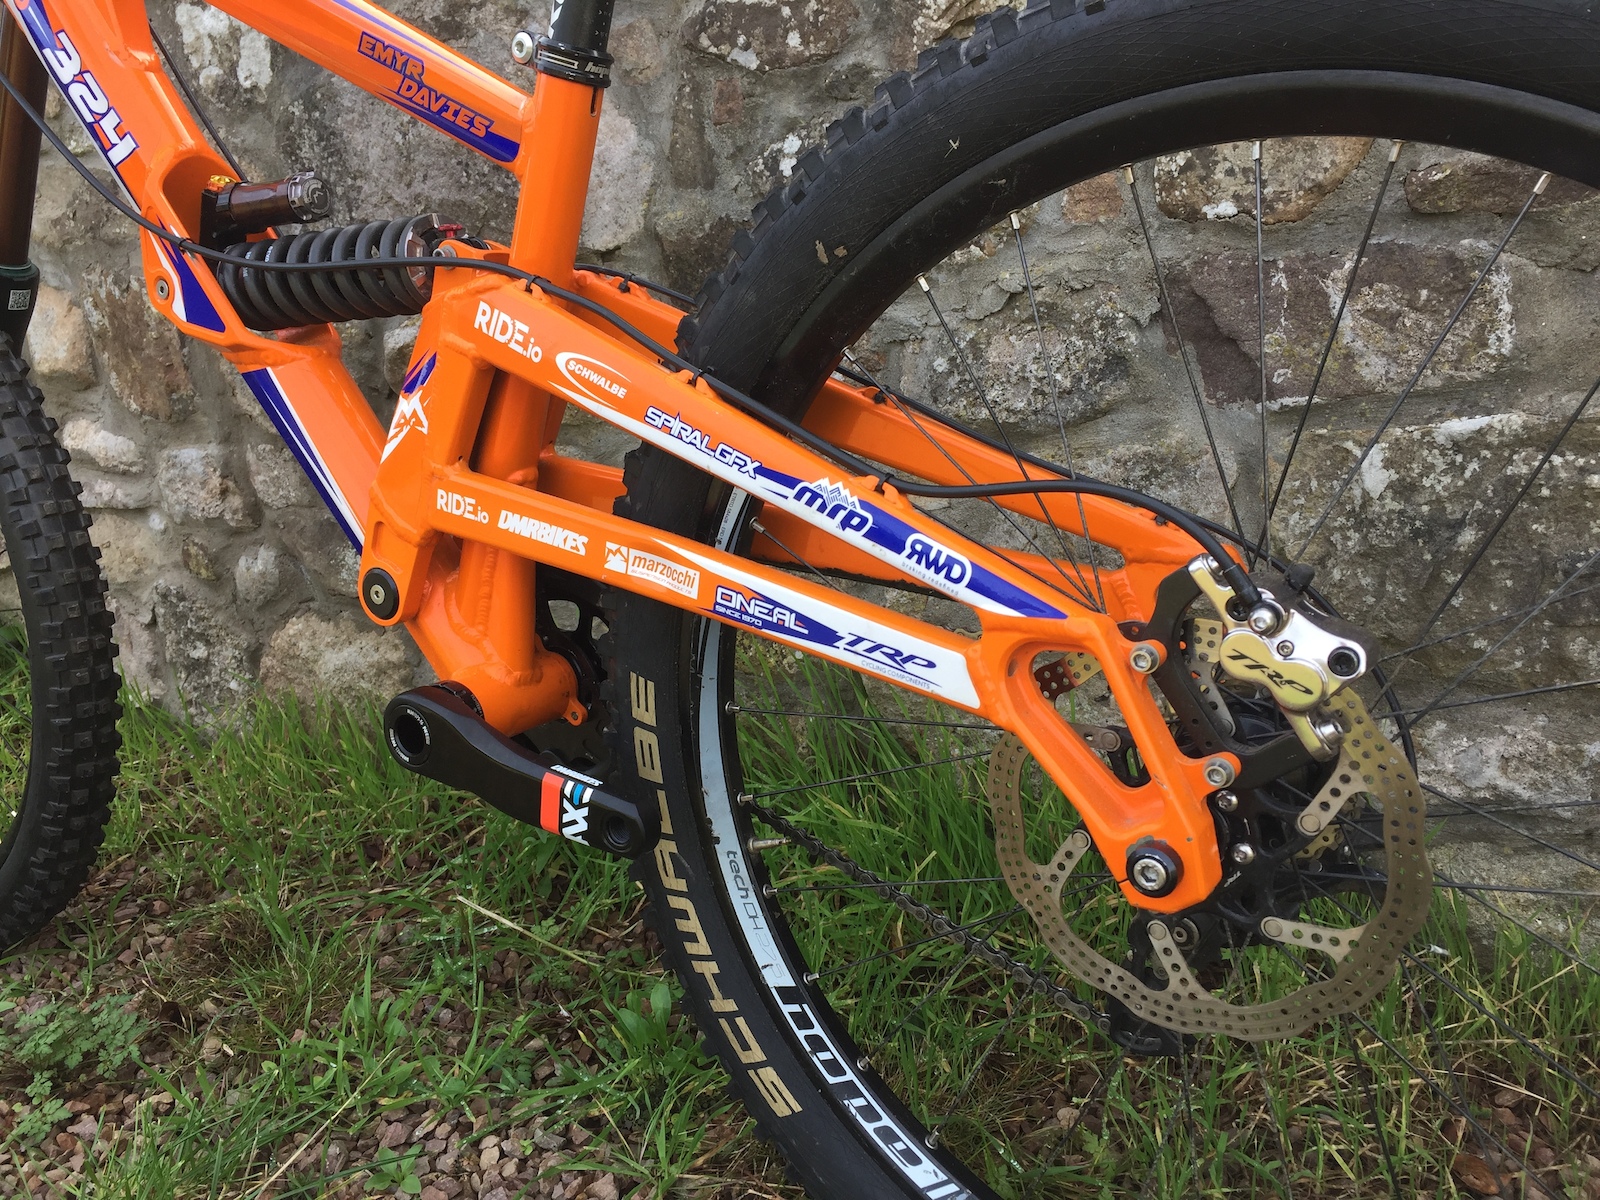 2017 2016 Orange 324 - Ride.io Team Display Bike